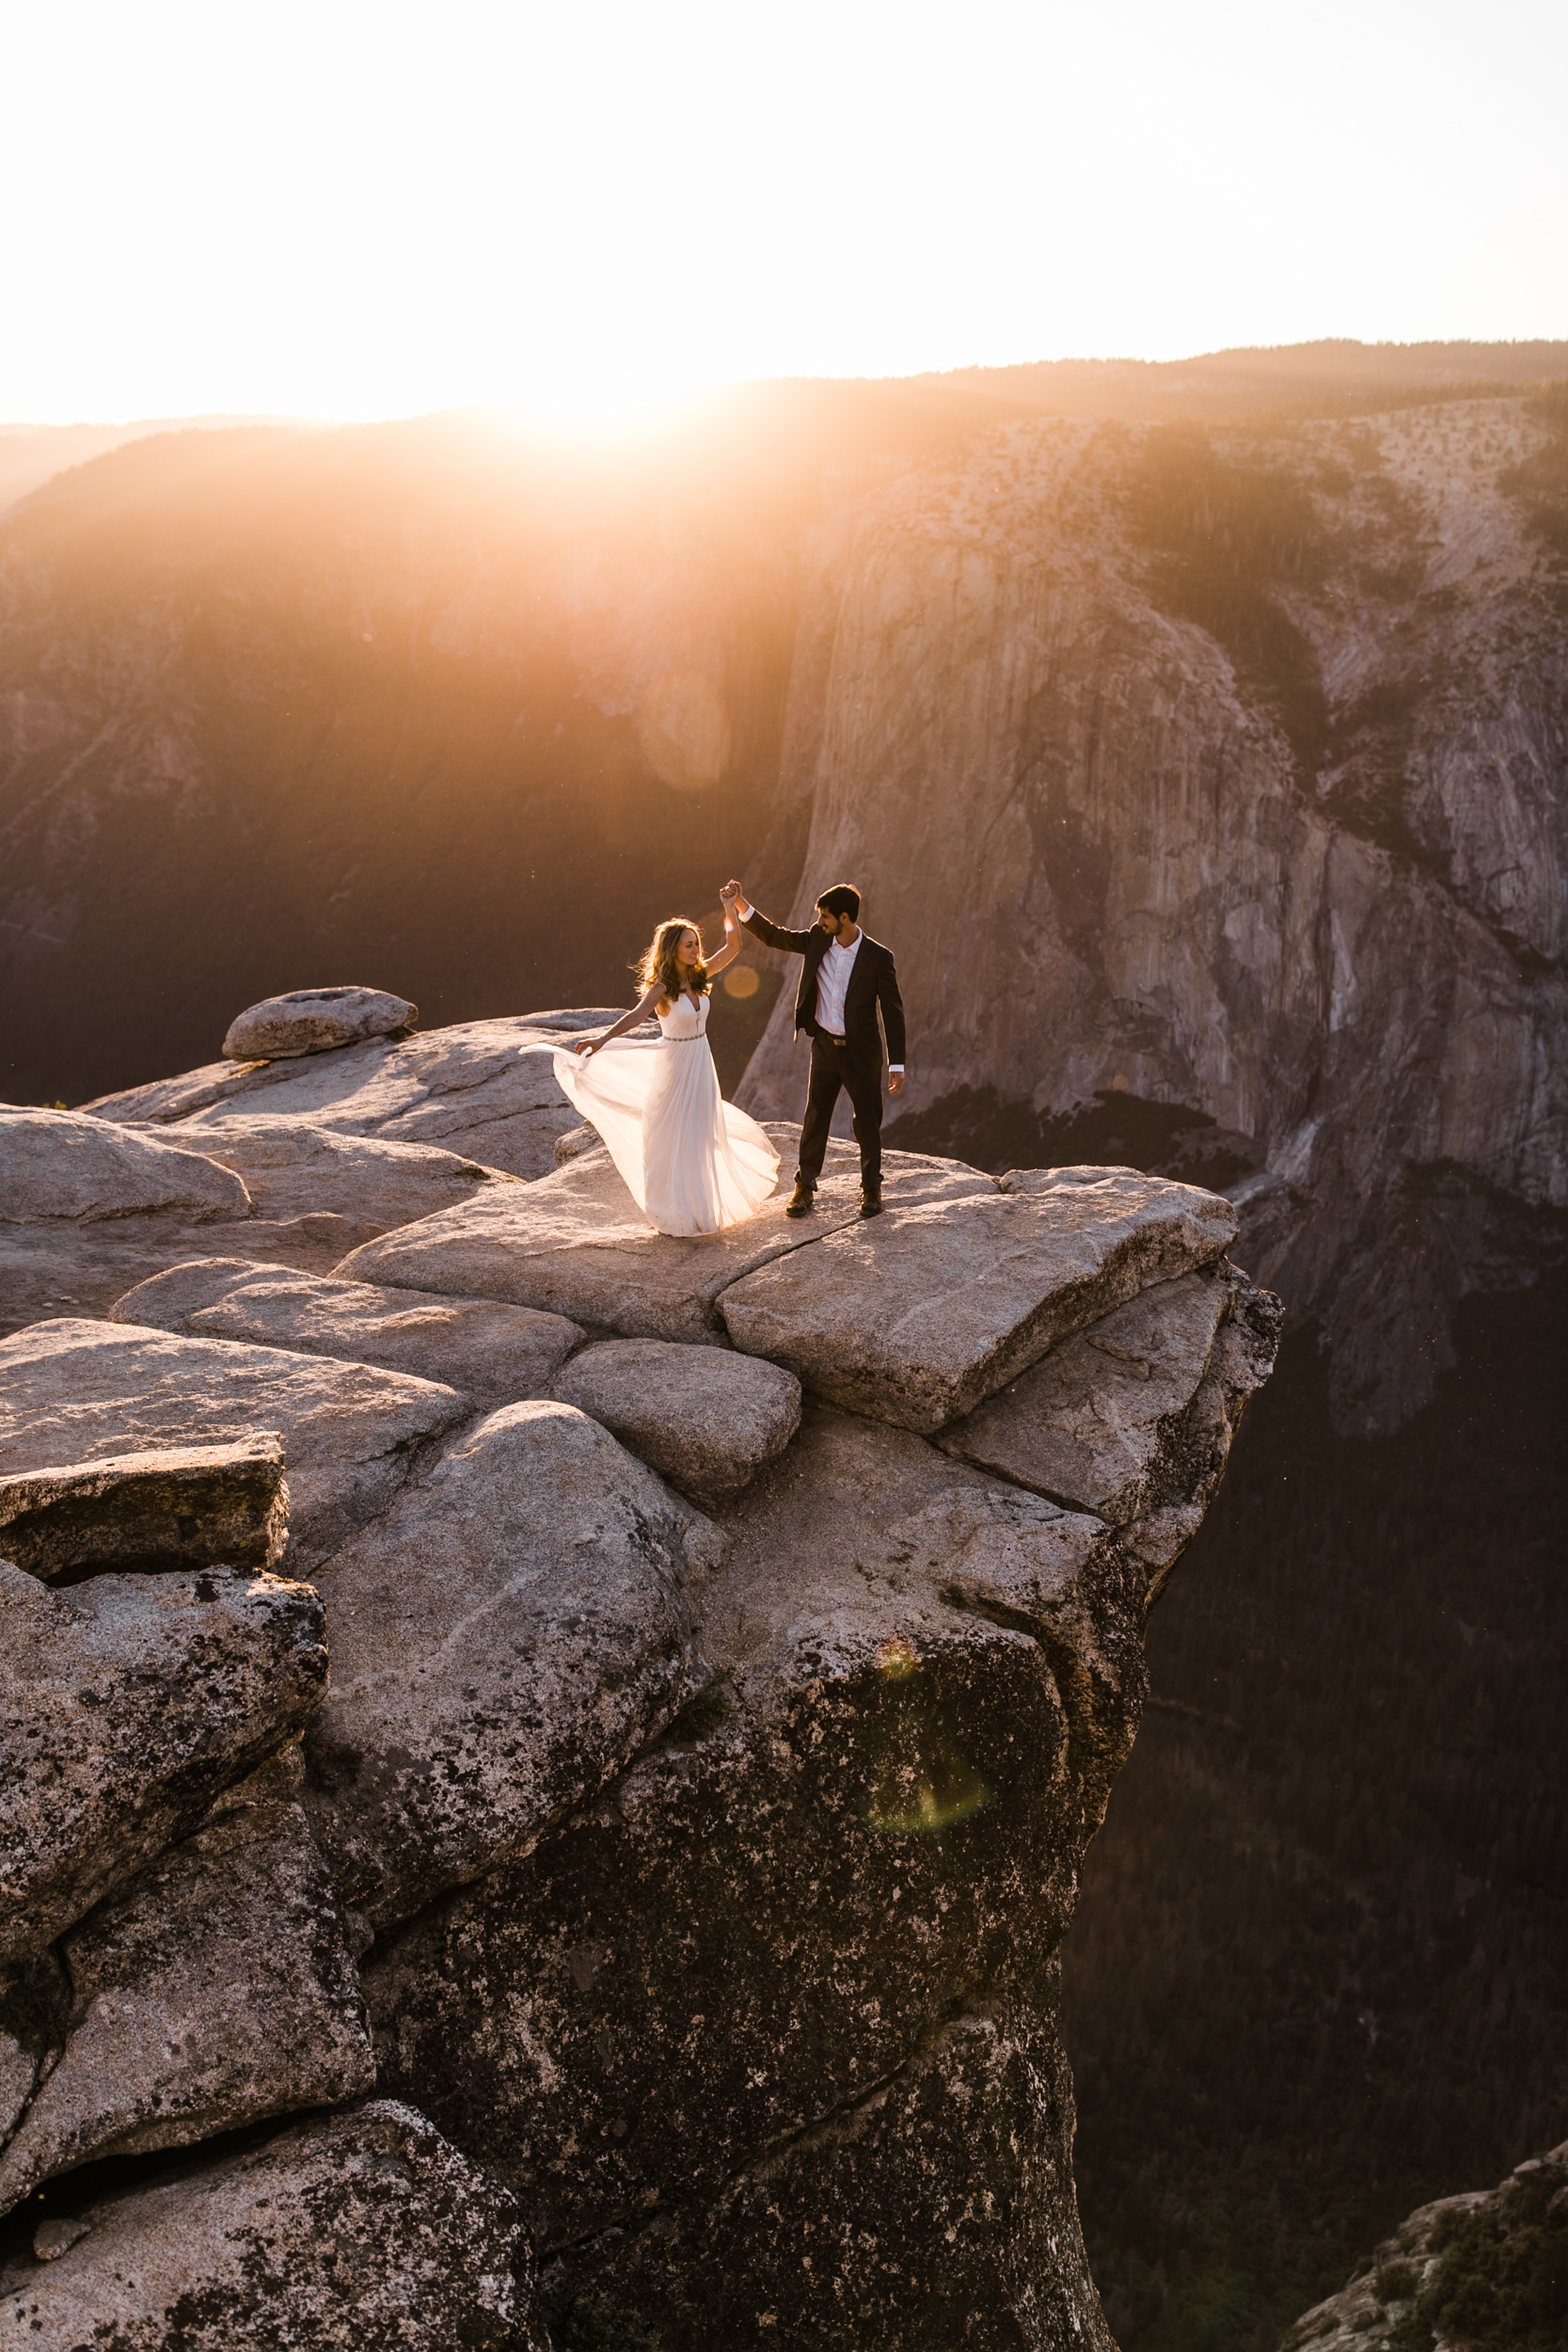 Chas + Michelle's adventurous wedding portraits | post-elopement photos in yosemite national park | adventure wedding photographer